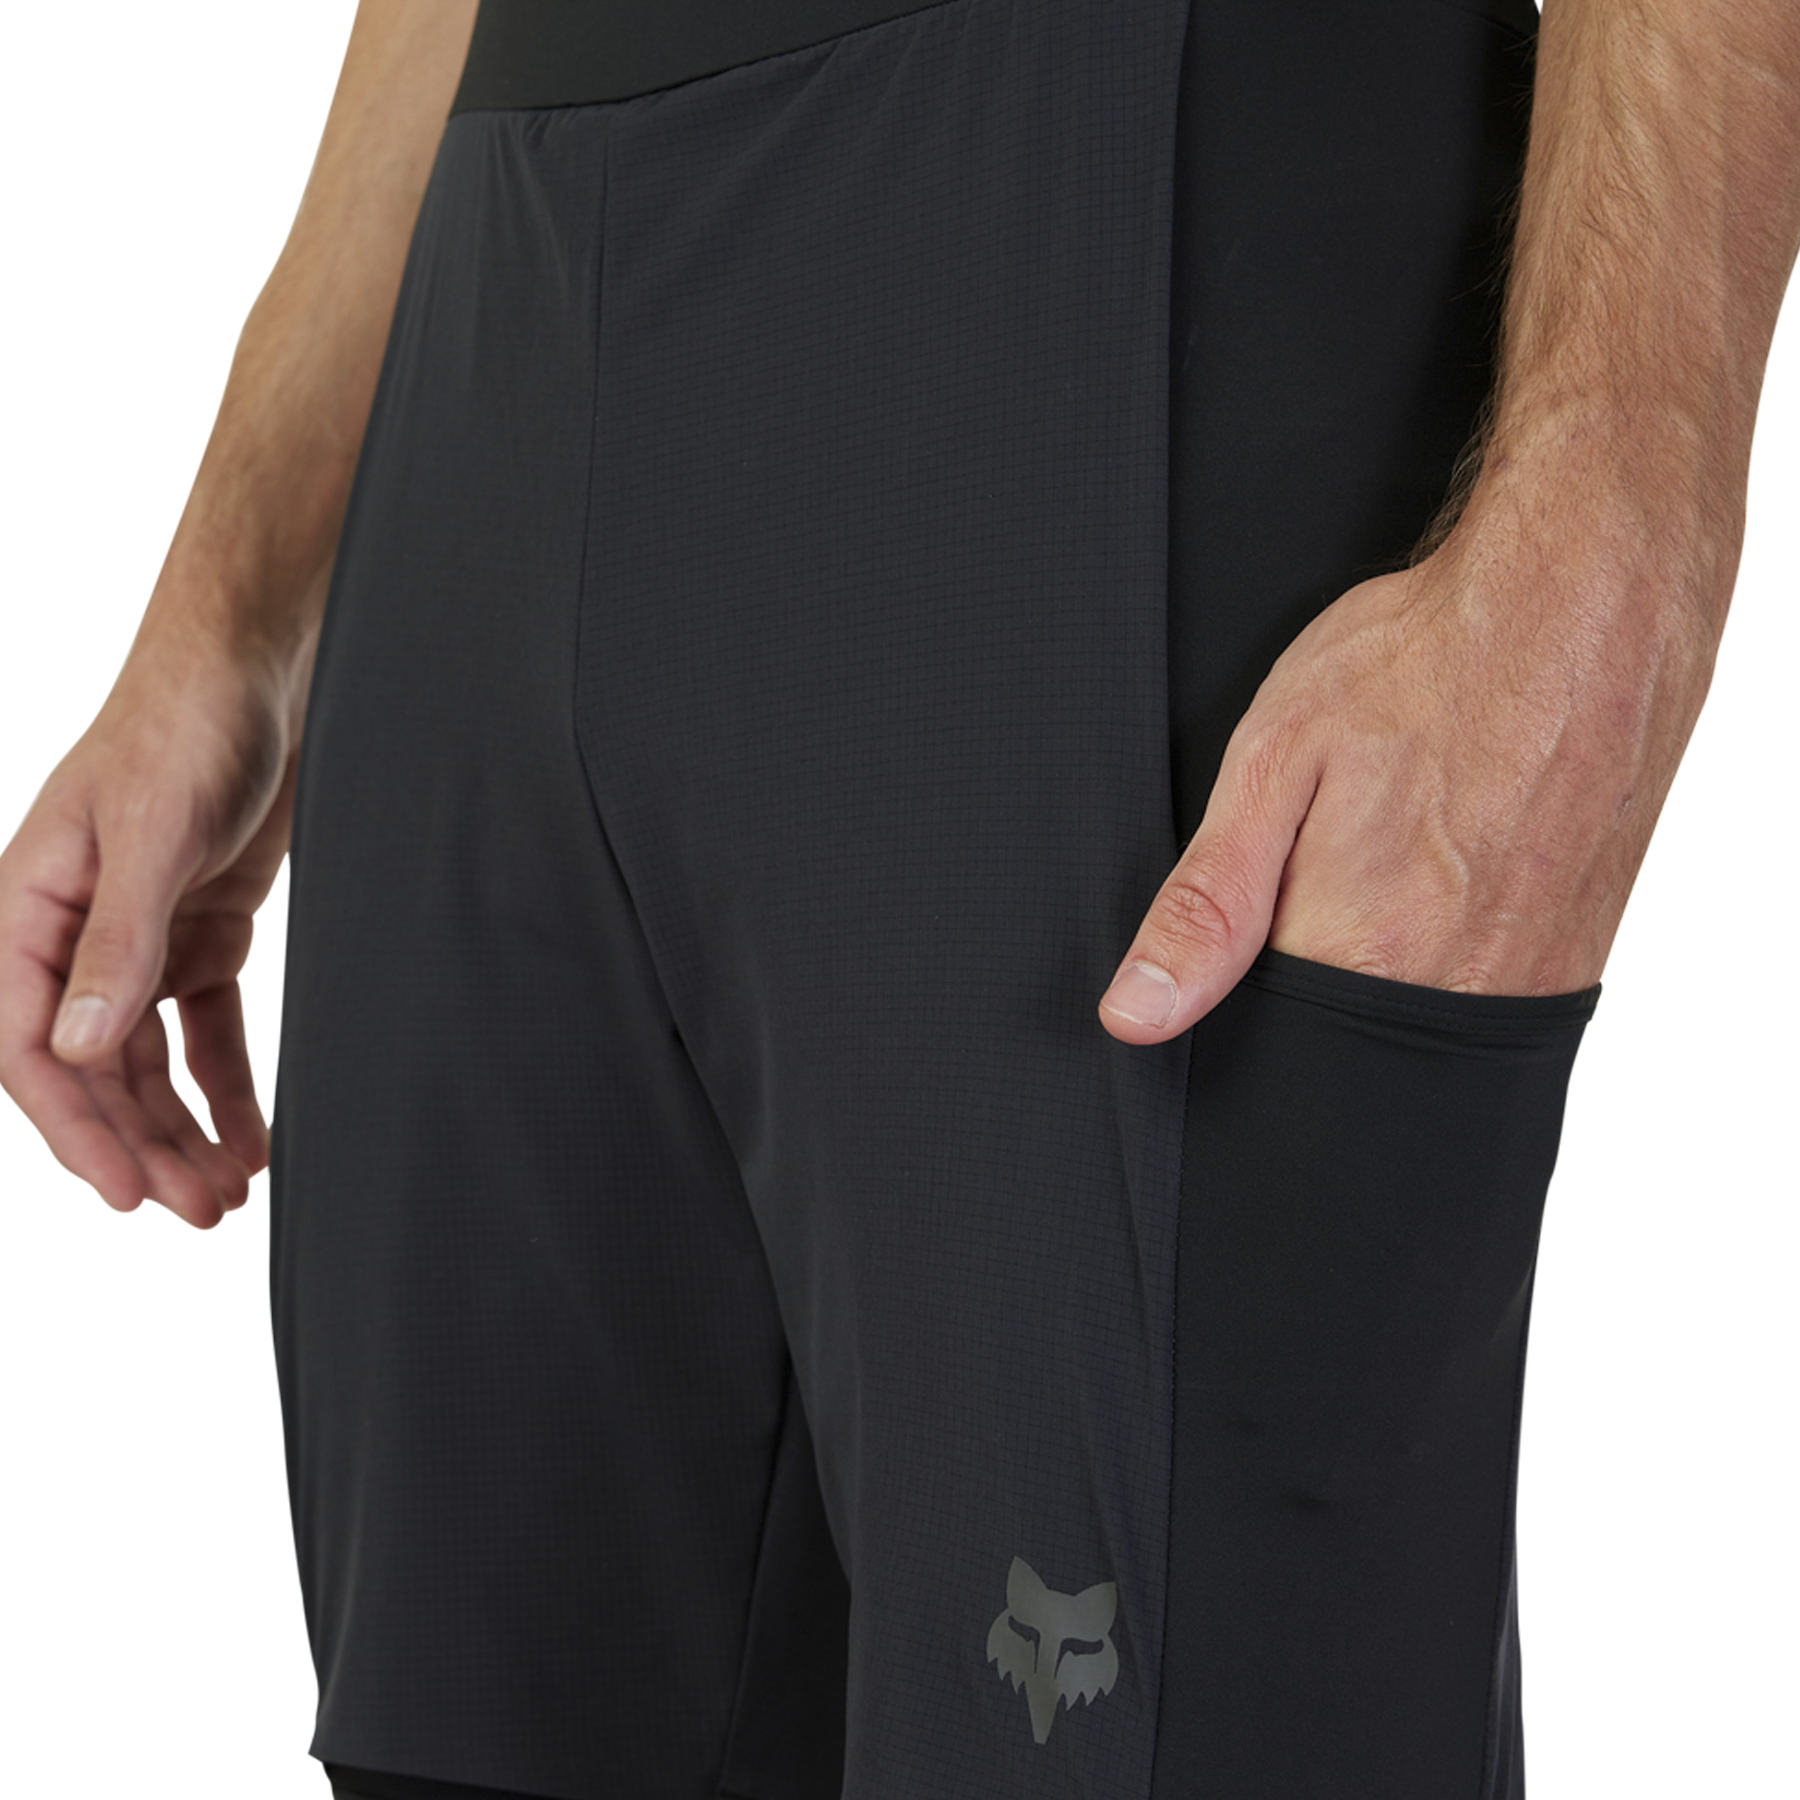 Fox Flexair Ascent Bib Shorts - S - Black - Image 3